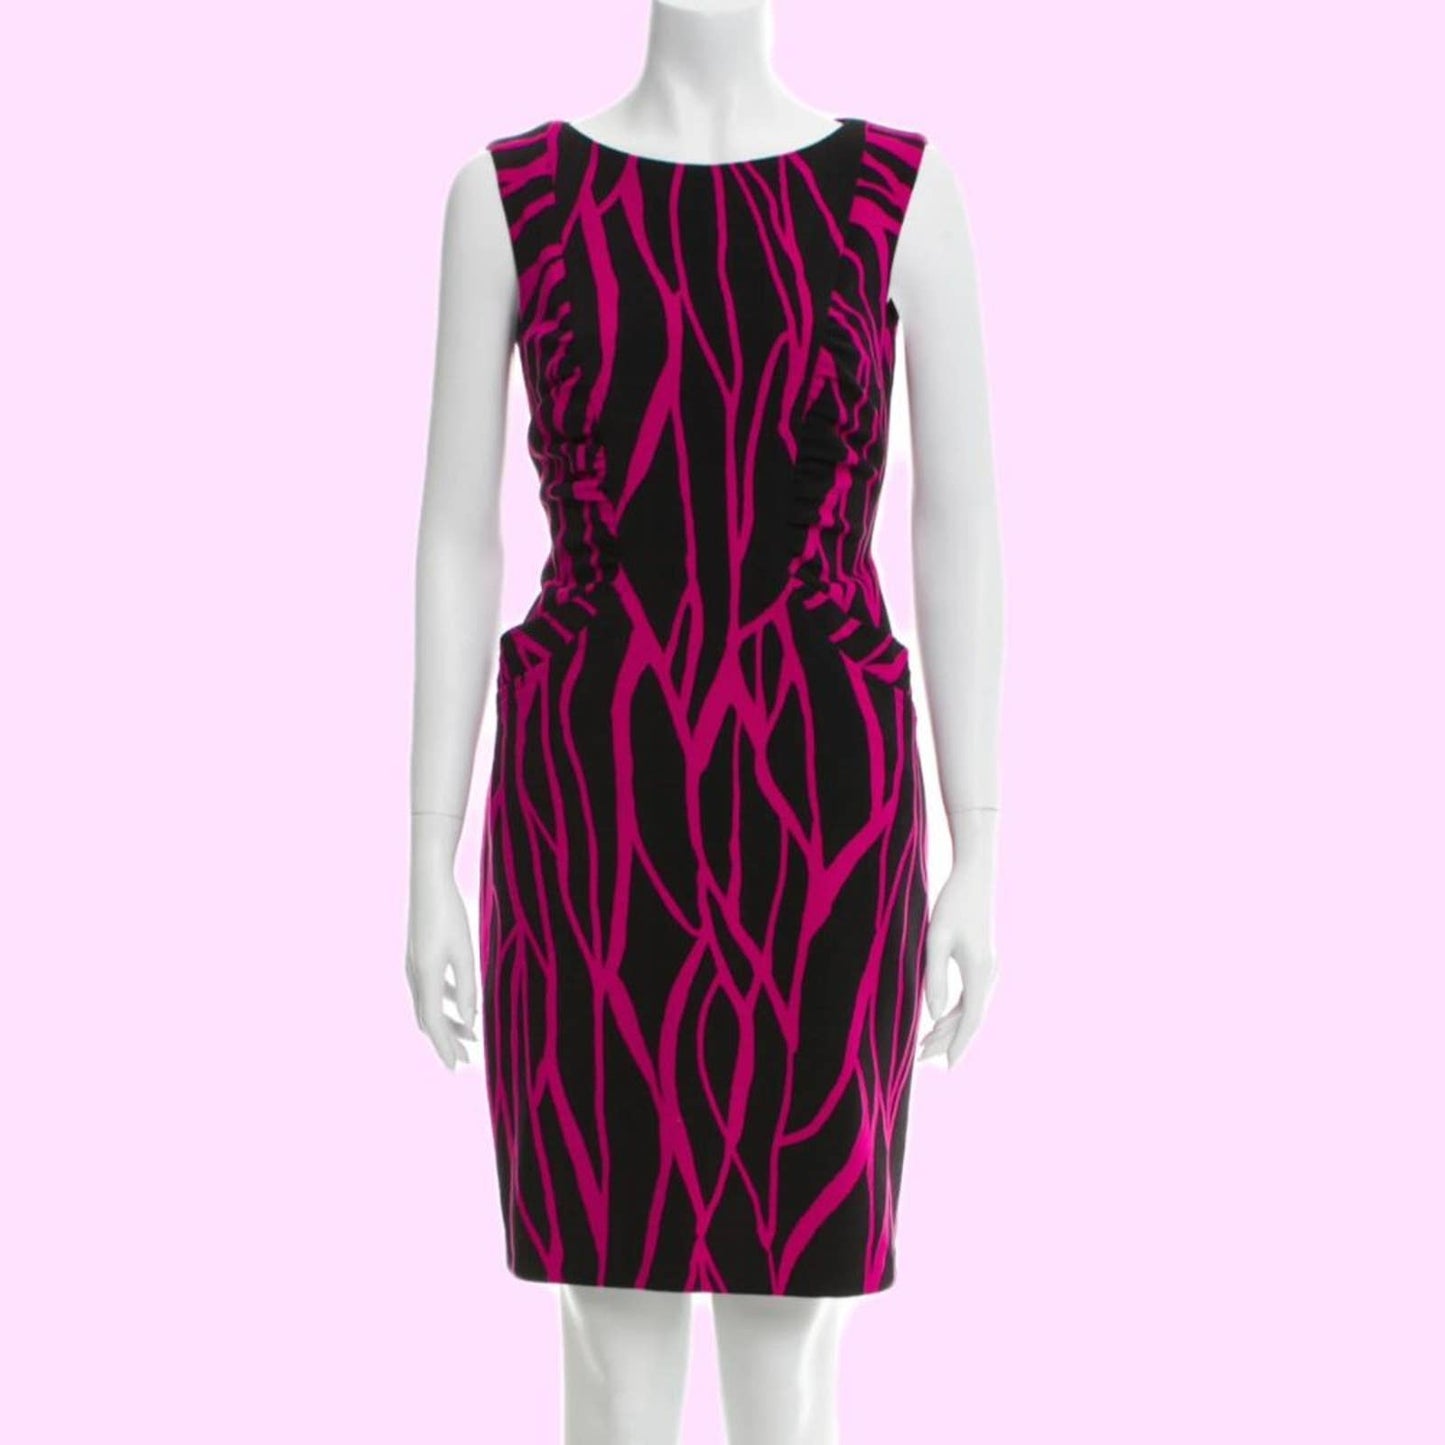 DAVID MEISTER Pink and Black Printed Sleeveless Dress